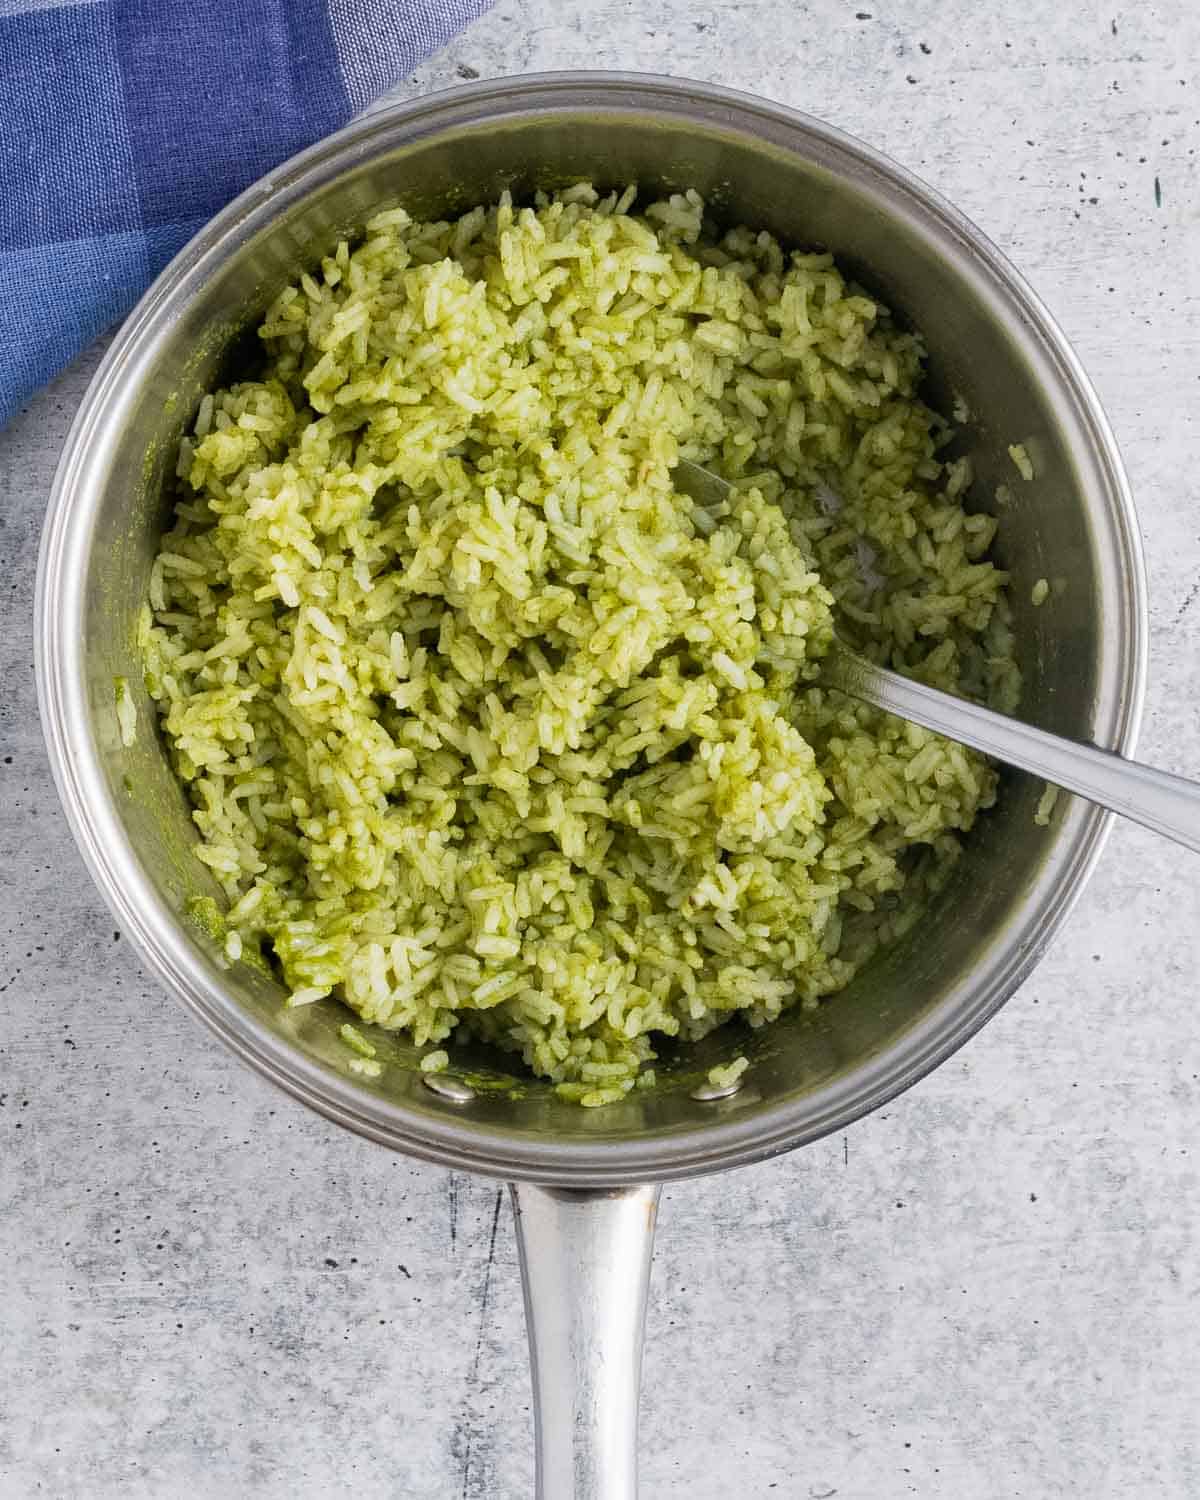 Fluffed out arroz verde in a saucepan.